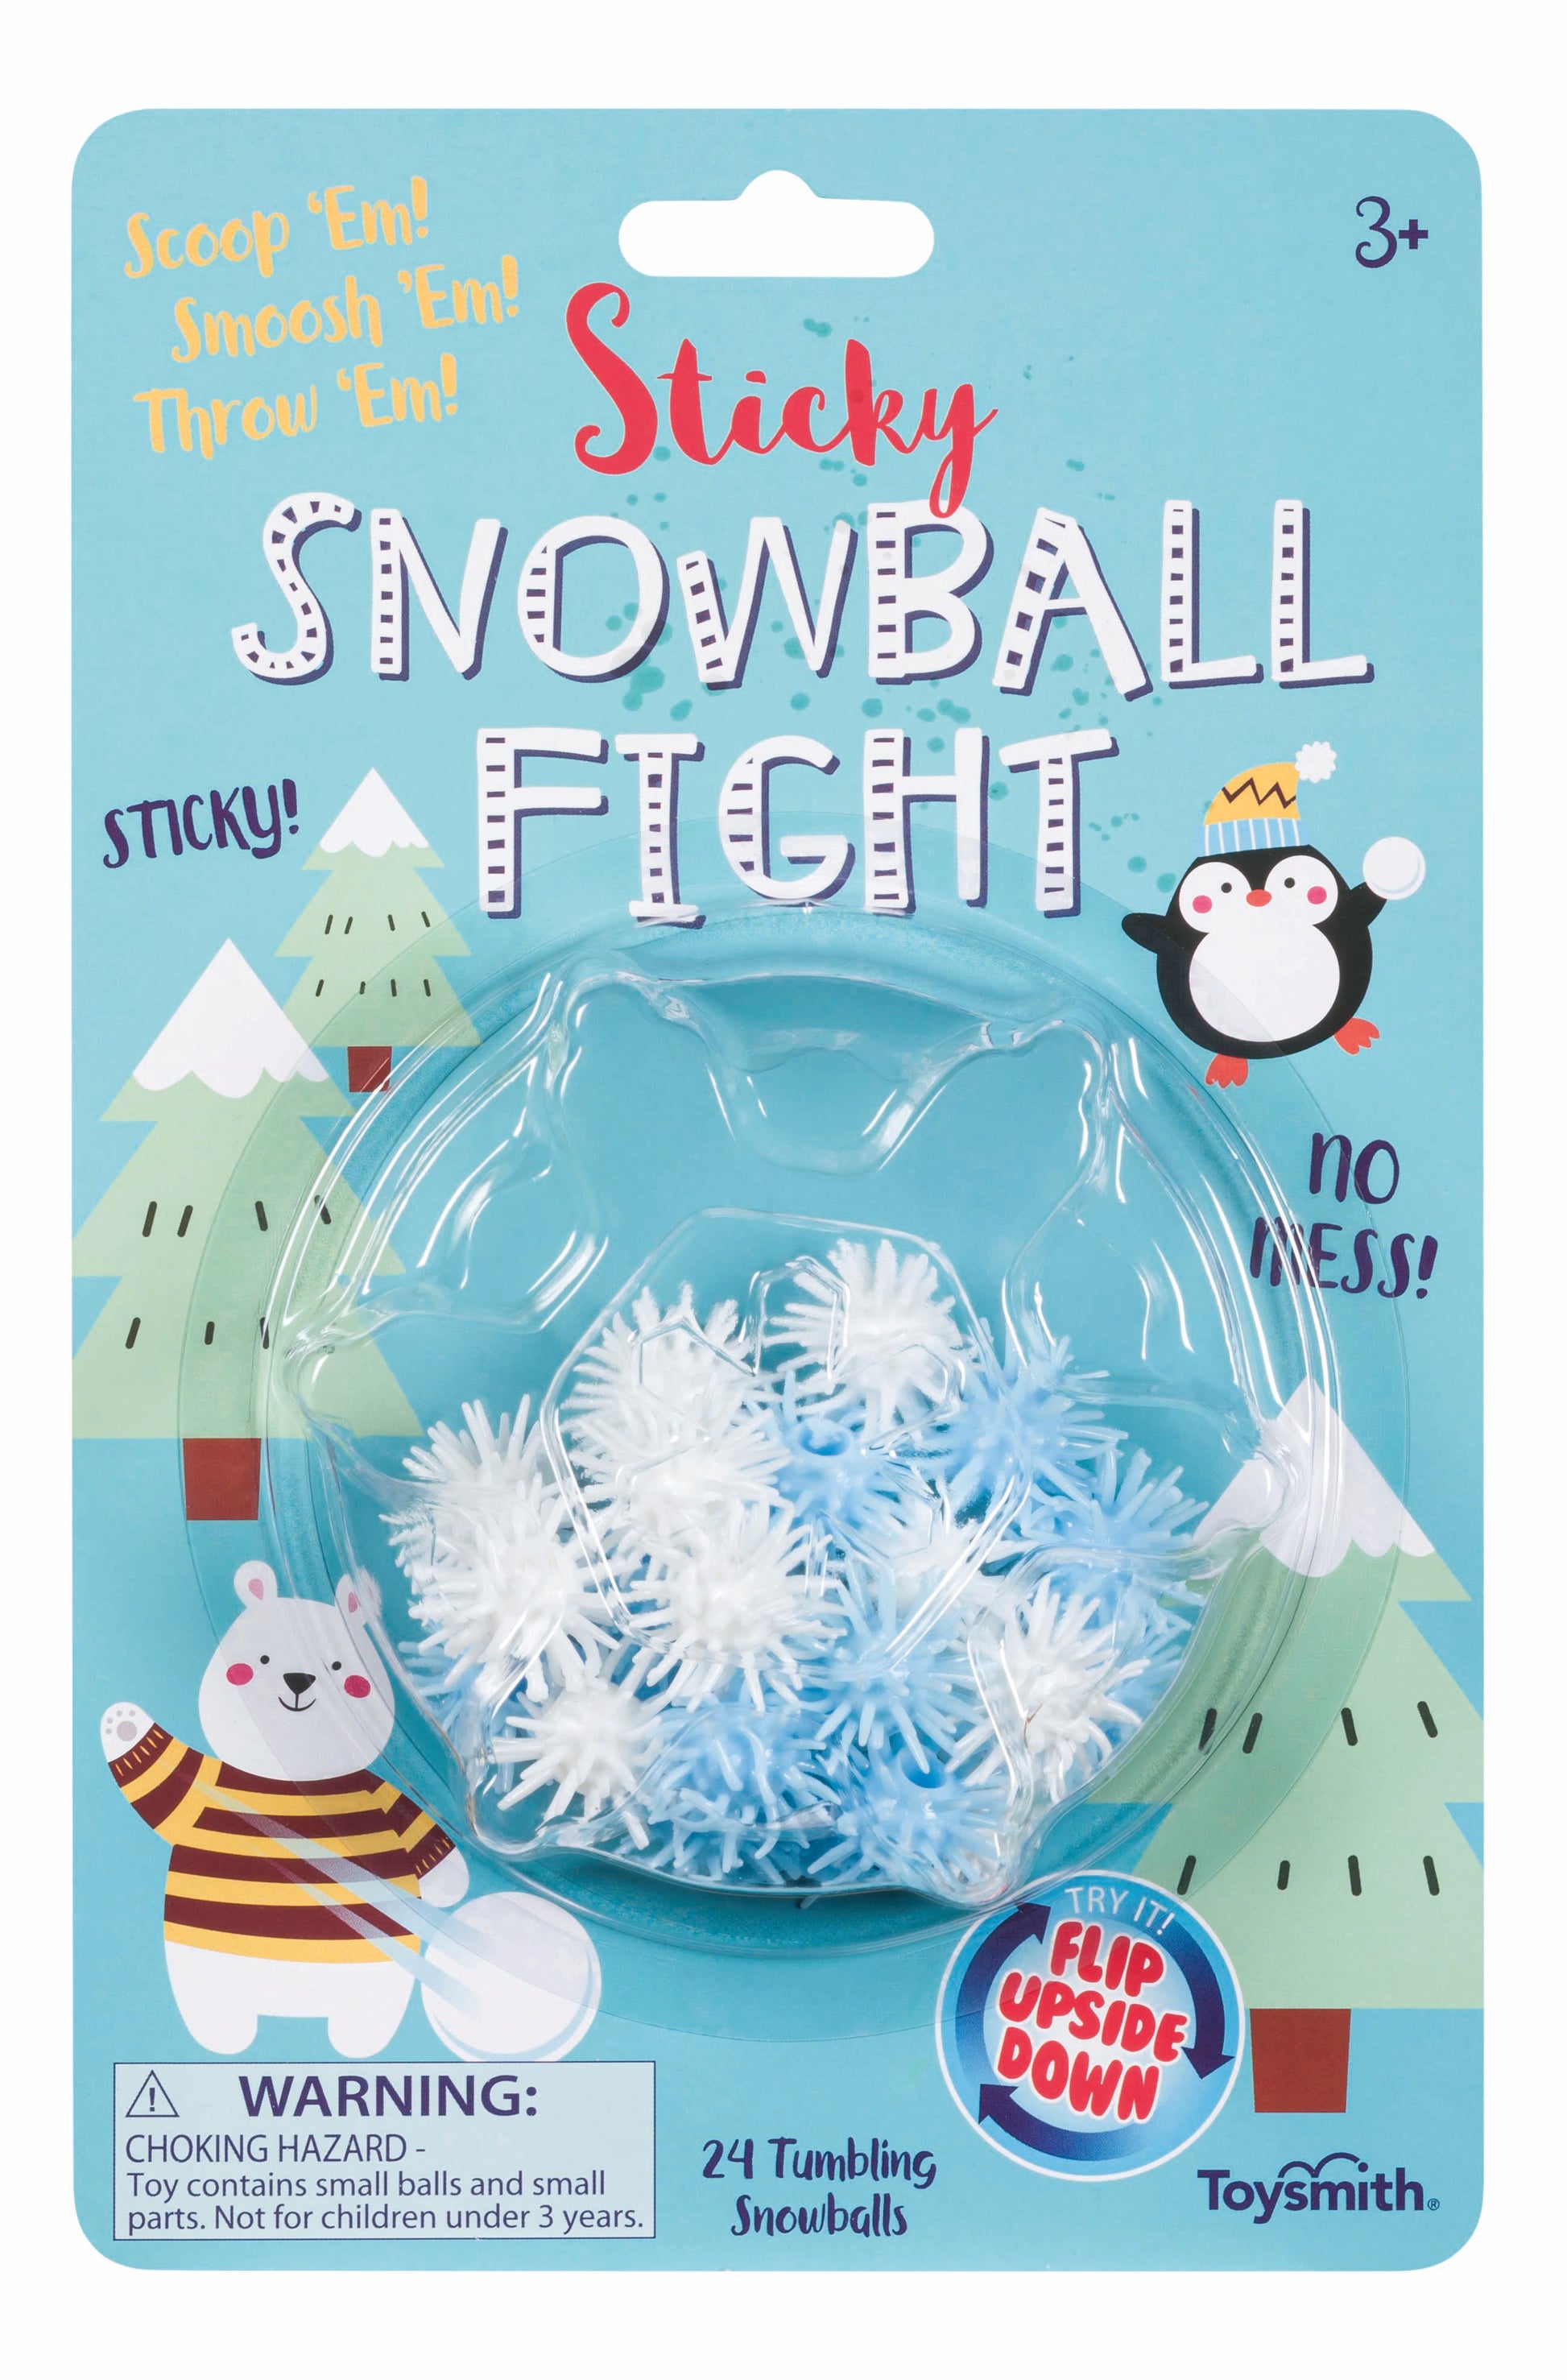 Toysmith Holiday Sticky Snowball Fight